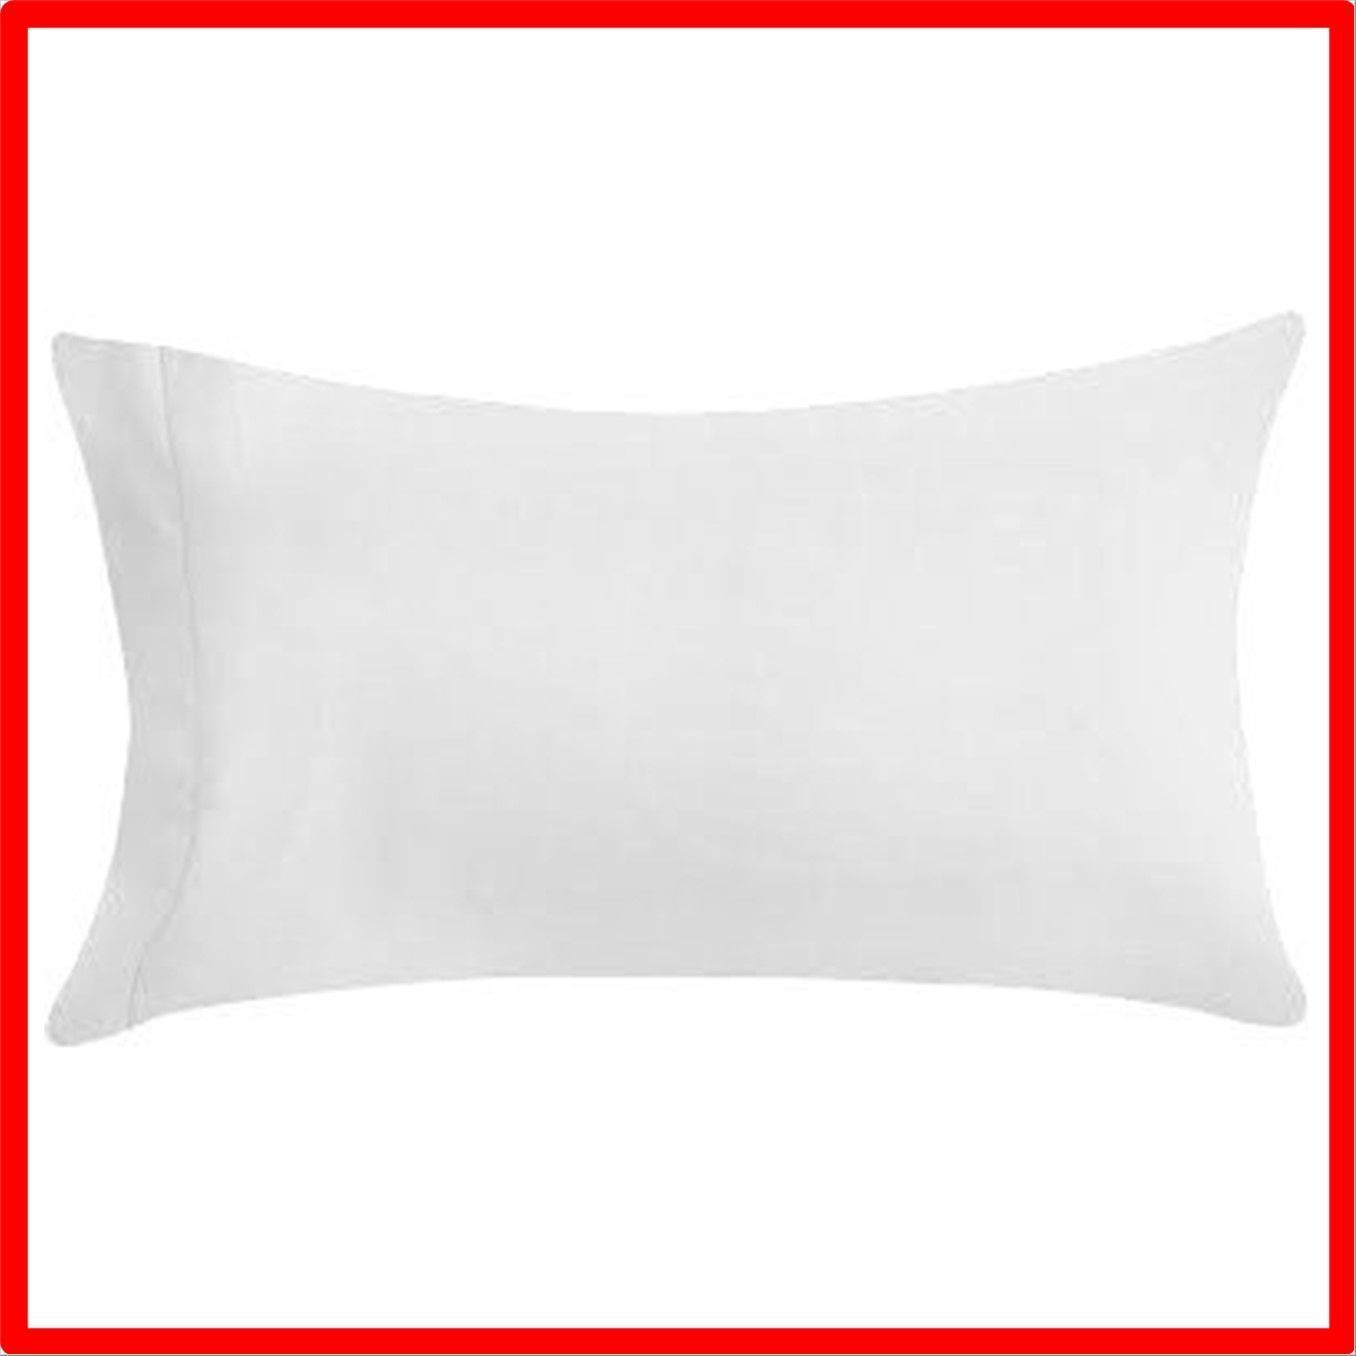 R.T. Home - エジプト高級超長綿ホテル品質枕カバー 30×45CM 500スレッドカウント サテン織り 白(ホワイト) そば殻枕、塩枕用 -  アンドロメダショップ - メルカリ